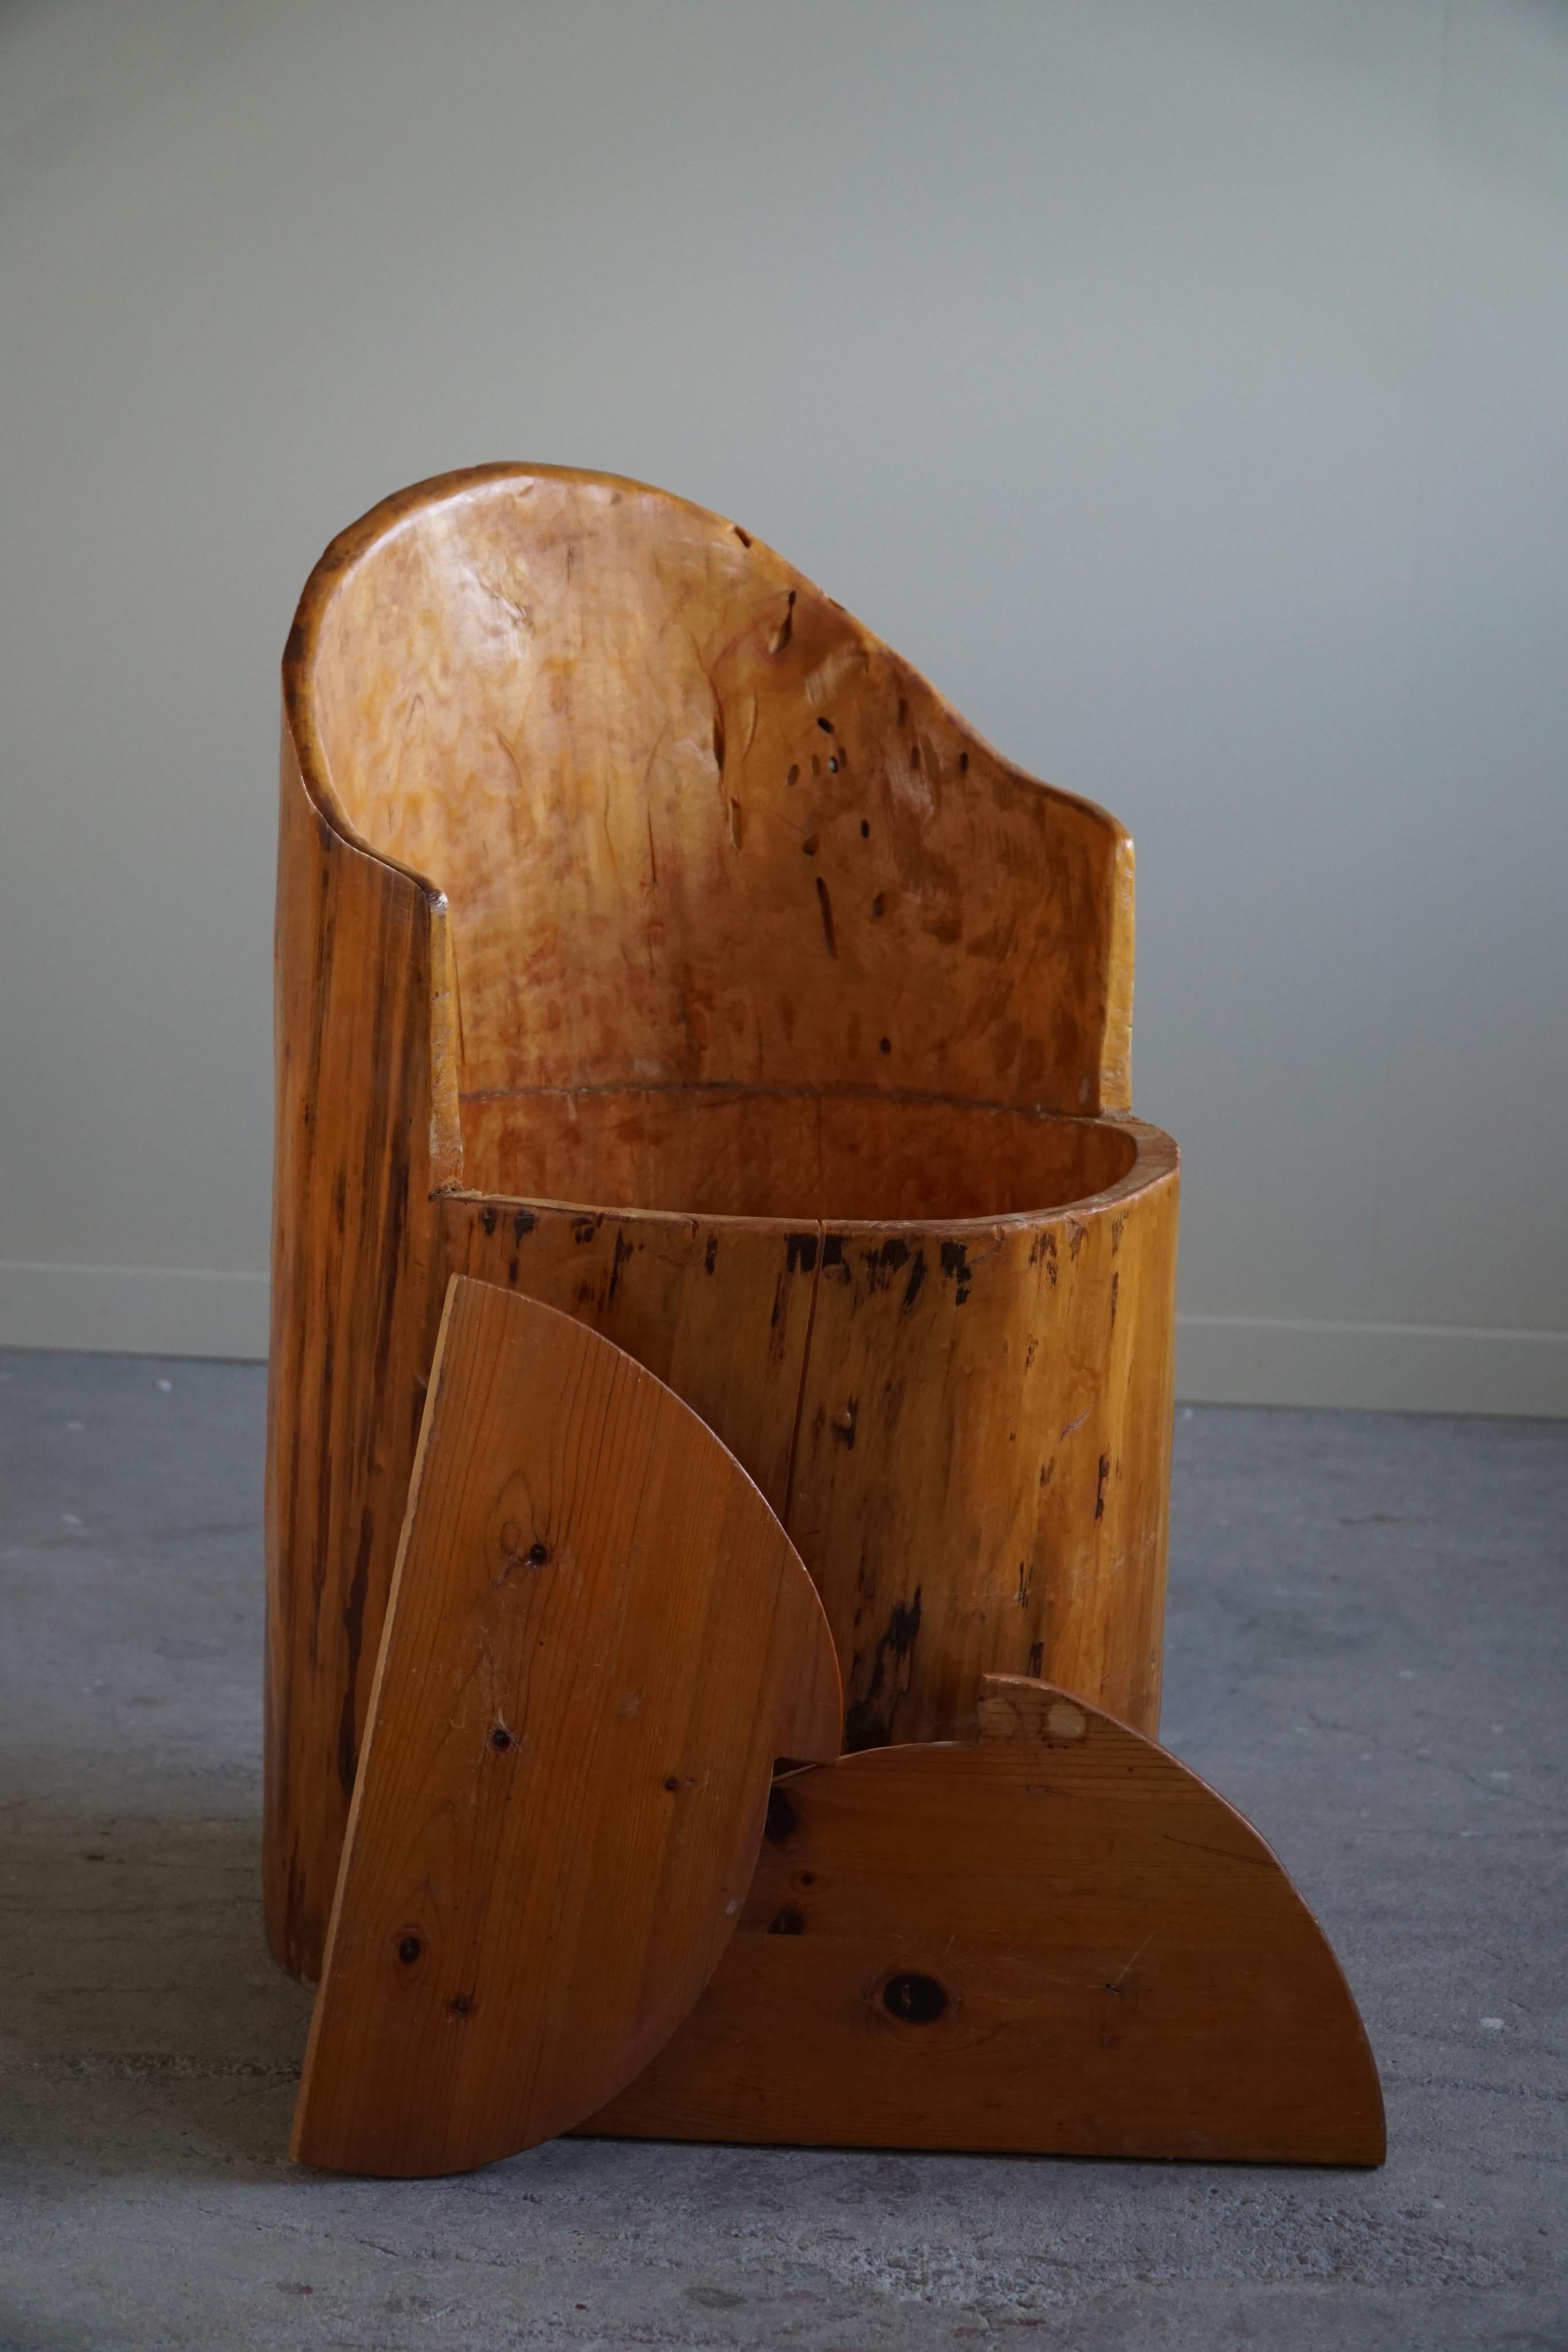 Primitive Stump Chair in Pine, Hand Carved, Swedish Modern, Wabi Sabi, 1960s For Sale 1